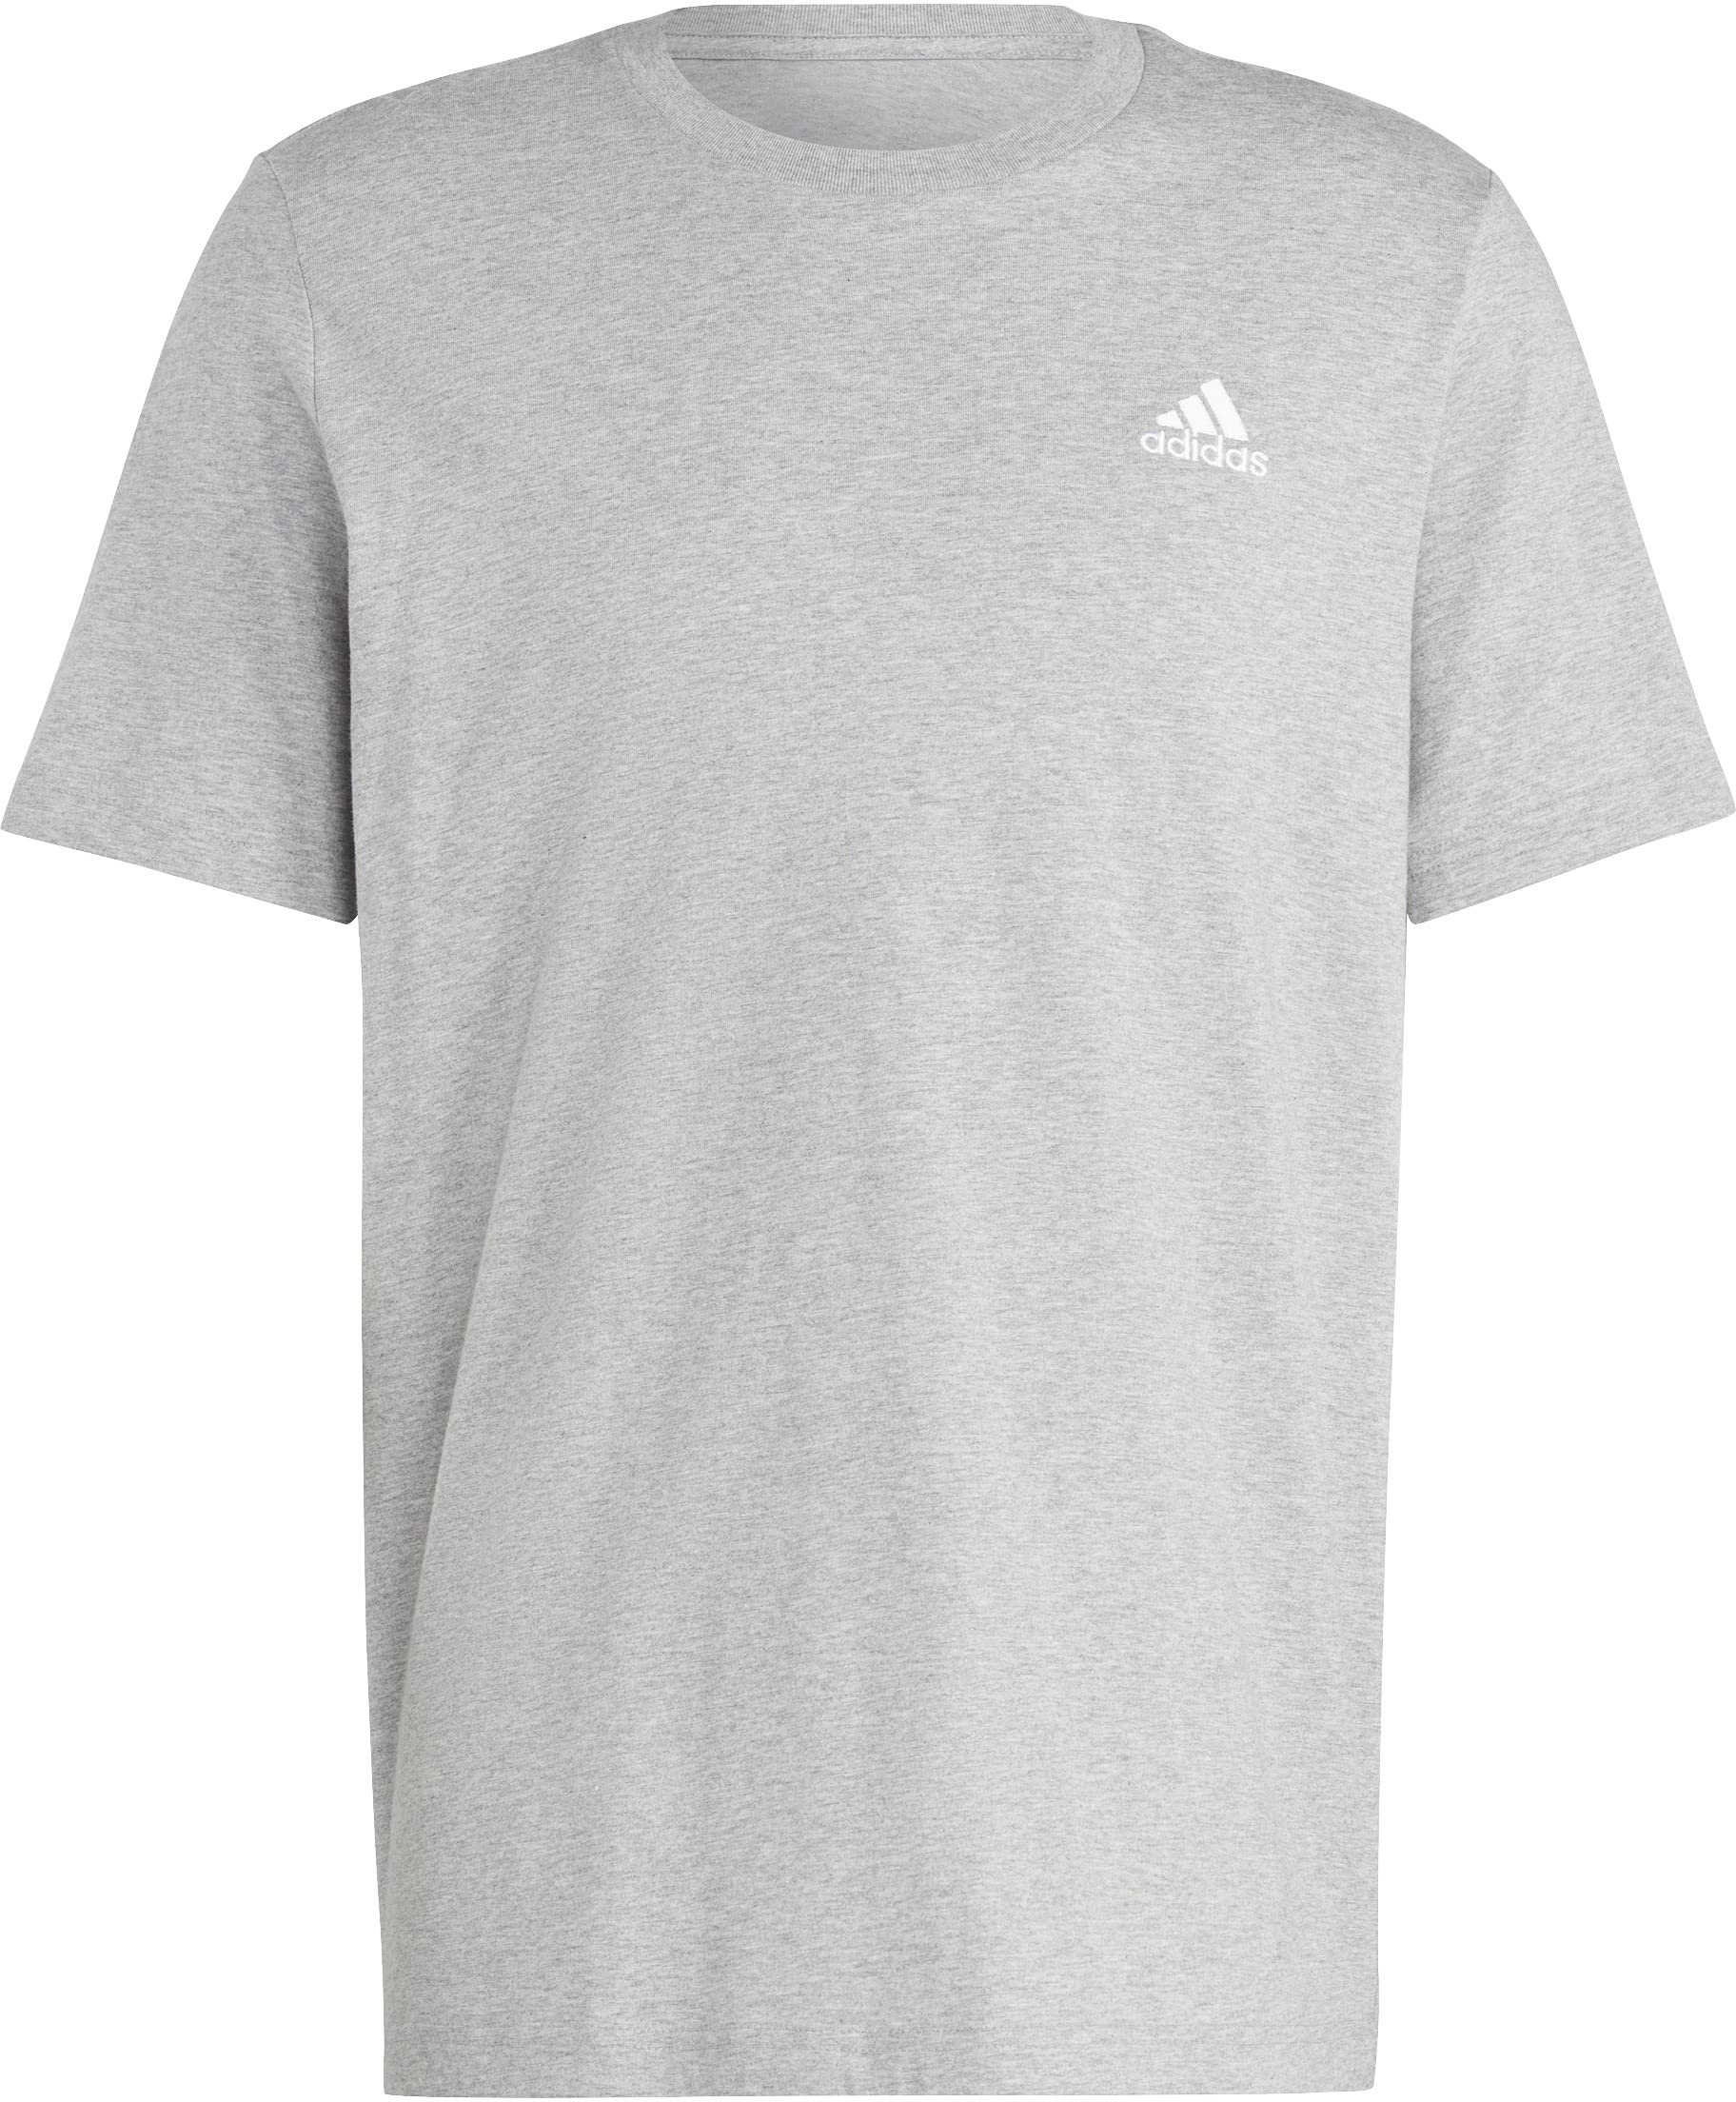 Adidas, Essentials Single Jersey Embroidered Small Logo, T-Shirt, Mittelgraues Heather, S, Mann